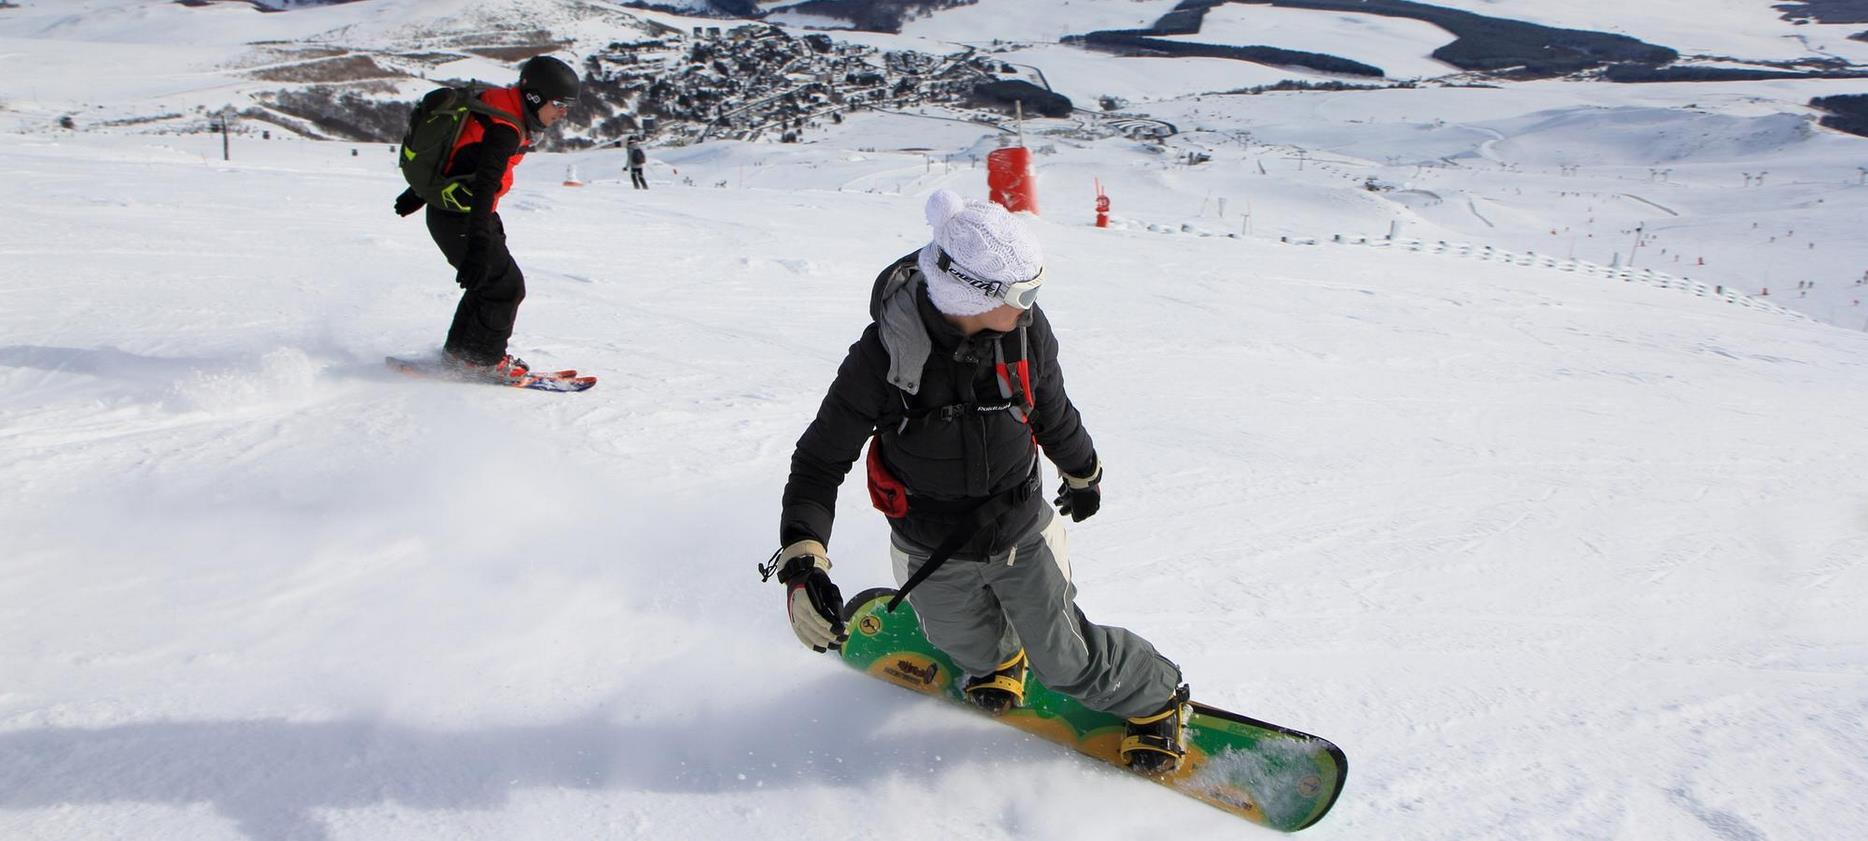 Super besse - Snowboarding on the slopes of the resort of Super Besse